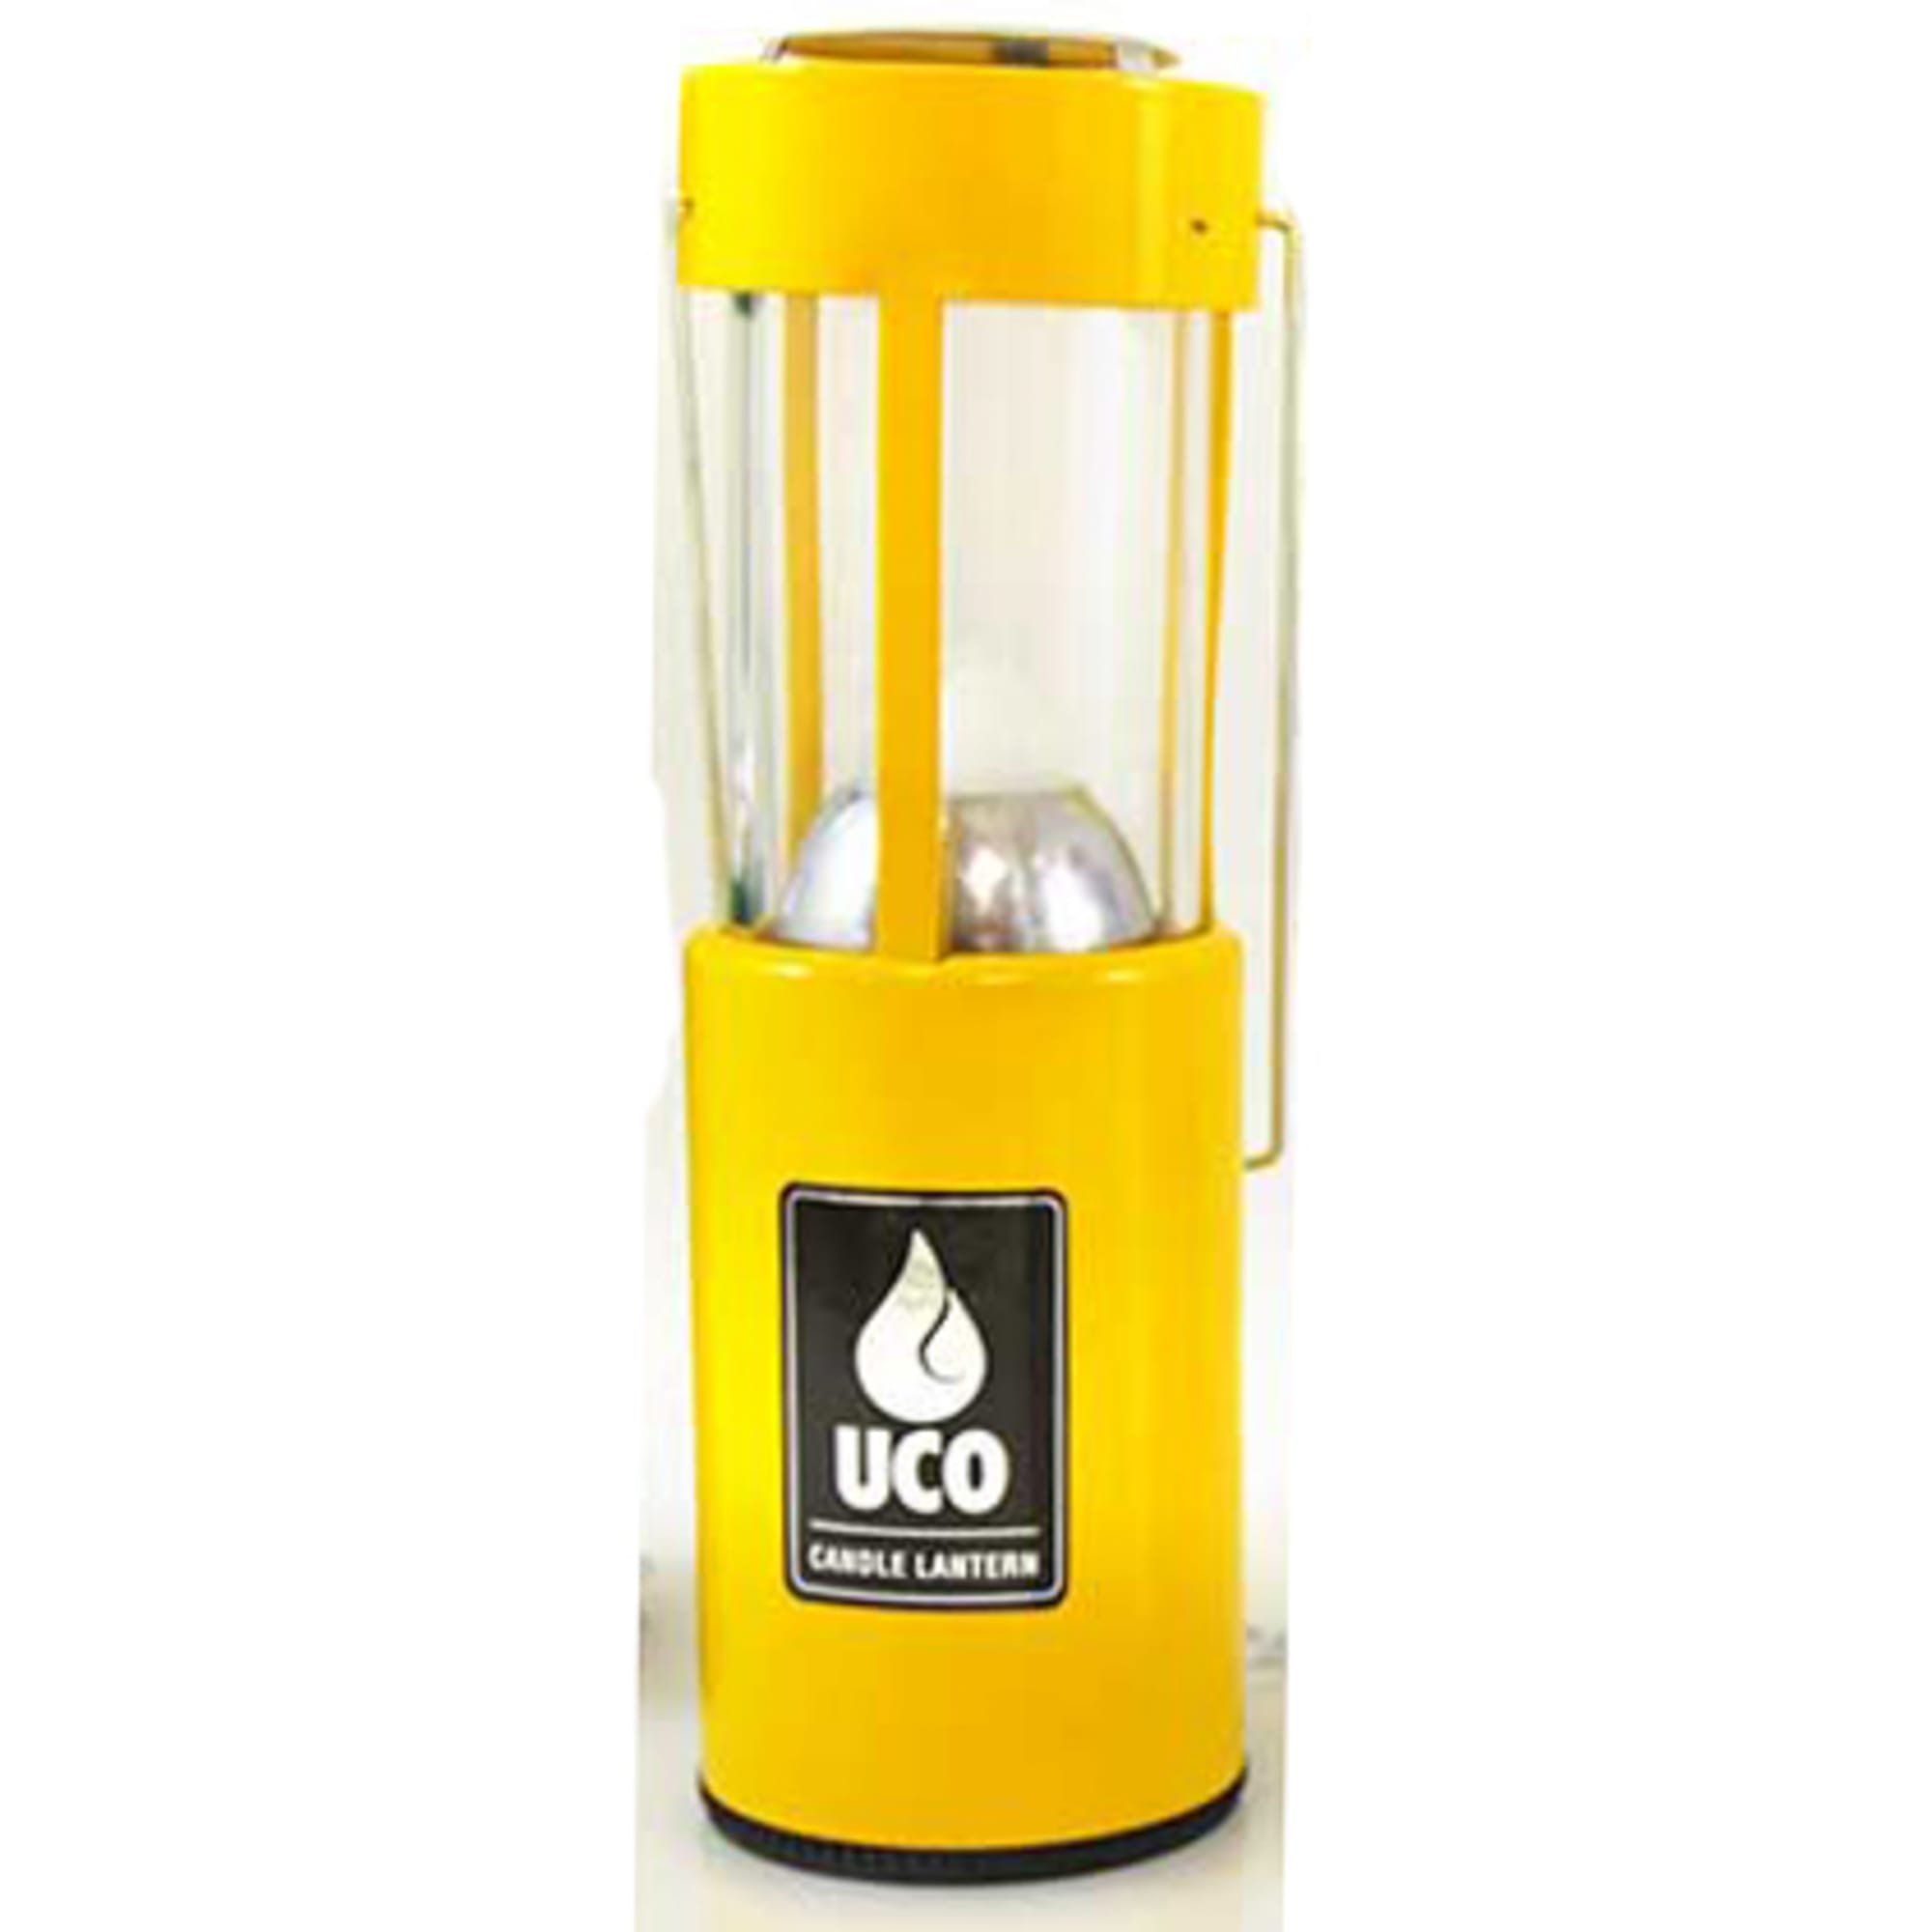 UCO Candle Lantern-Yellow